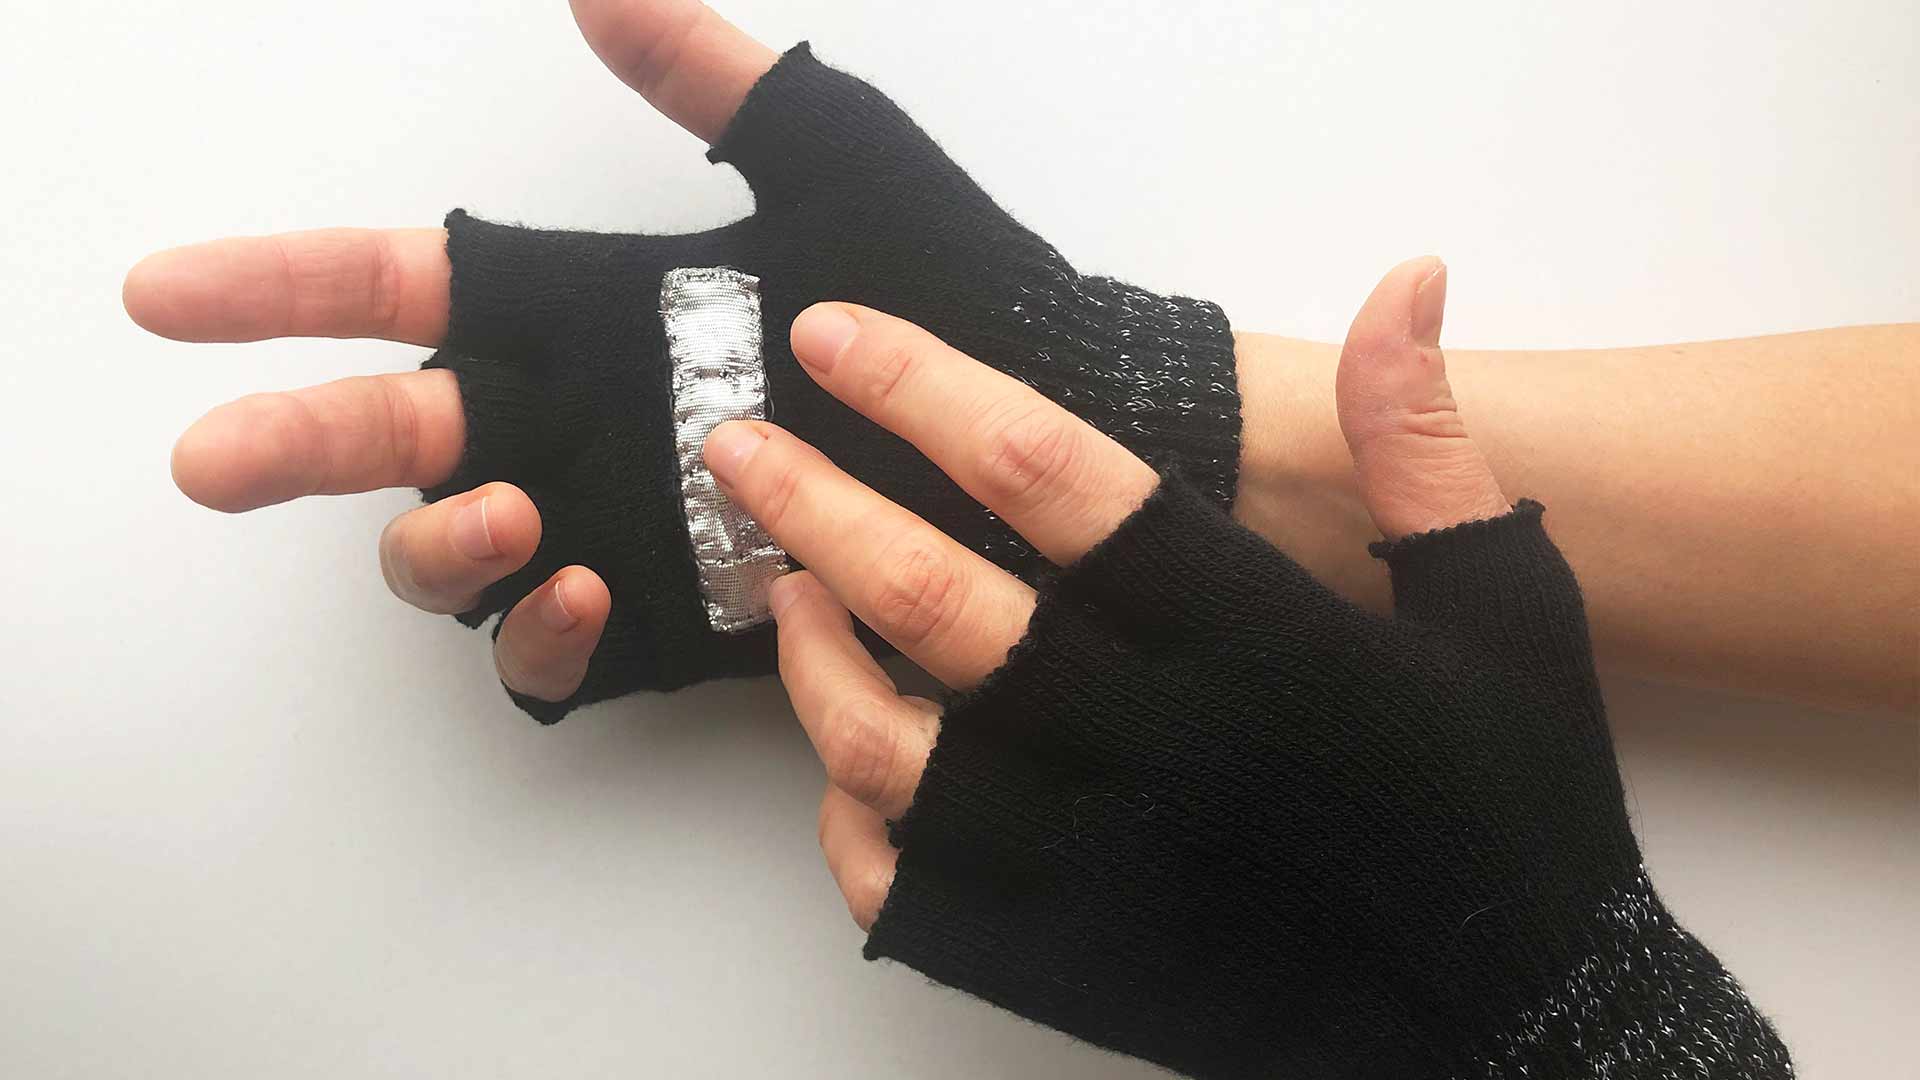 Handschuhe werden als Designobjekt präsentiert